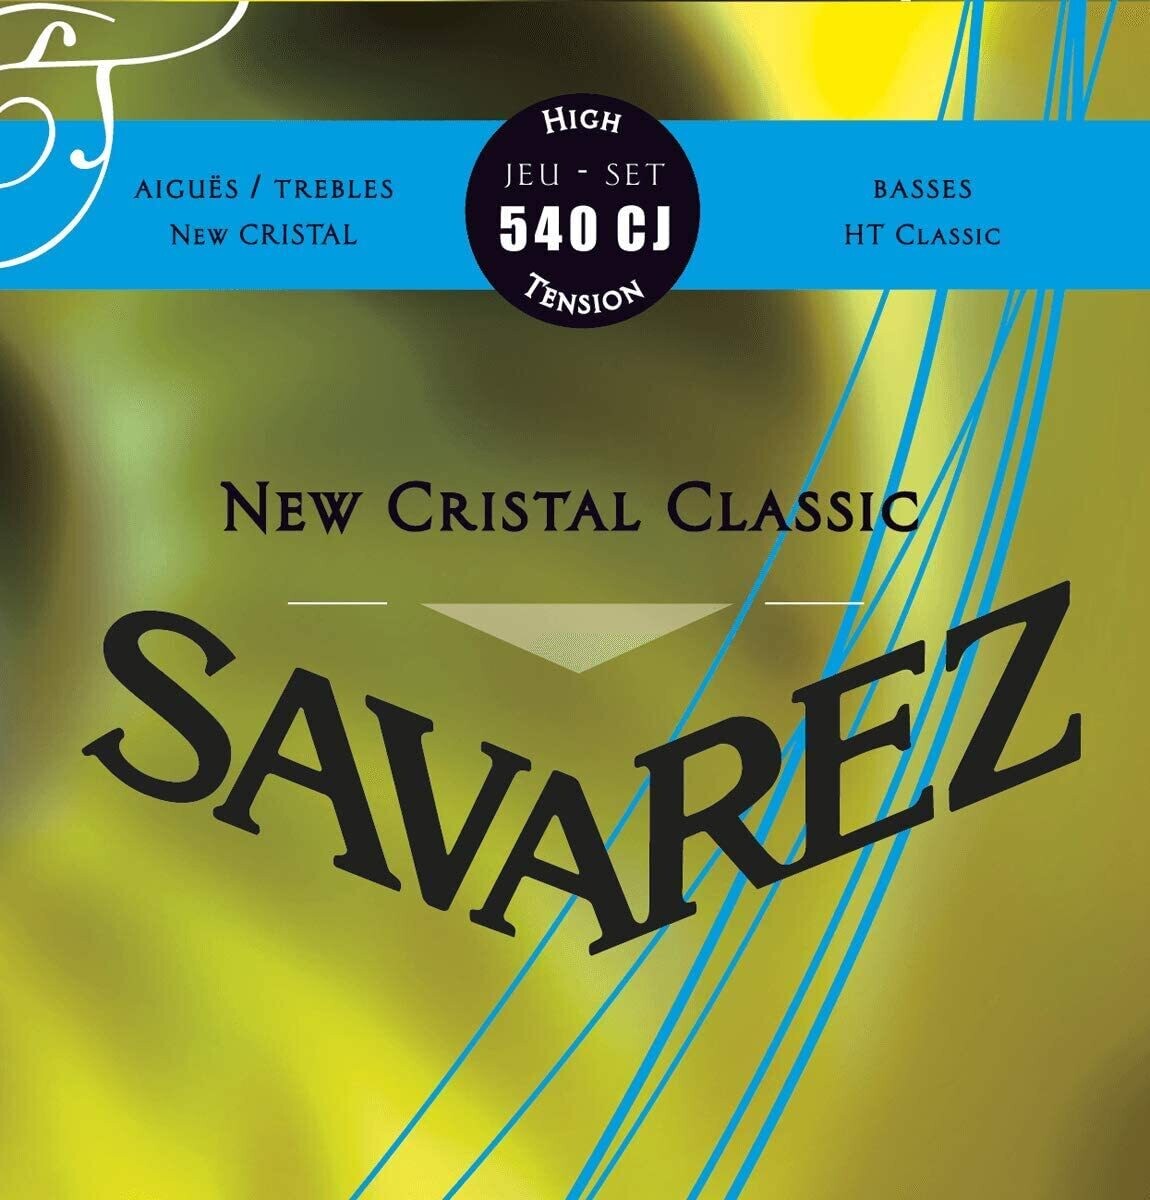 Savarez 540CJ - New Cristal Classic Strings - High  Tension